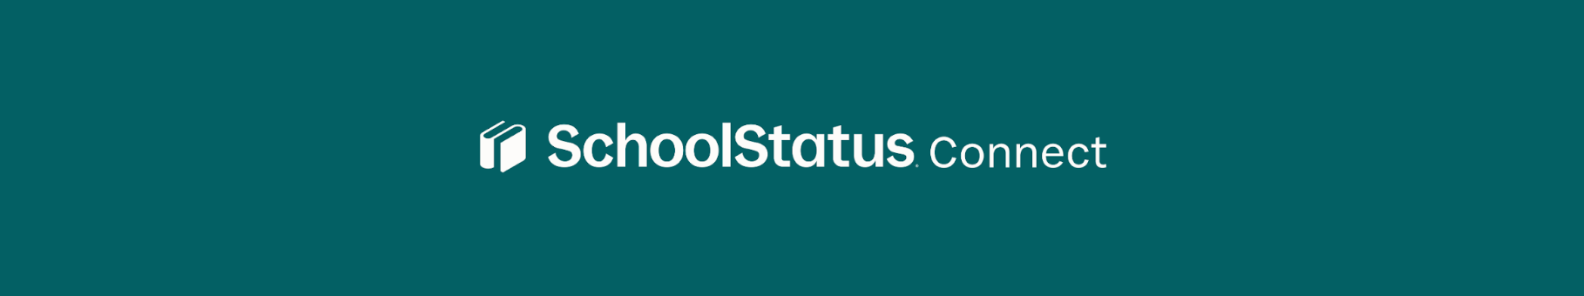 SchoolStatus Connect logo